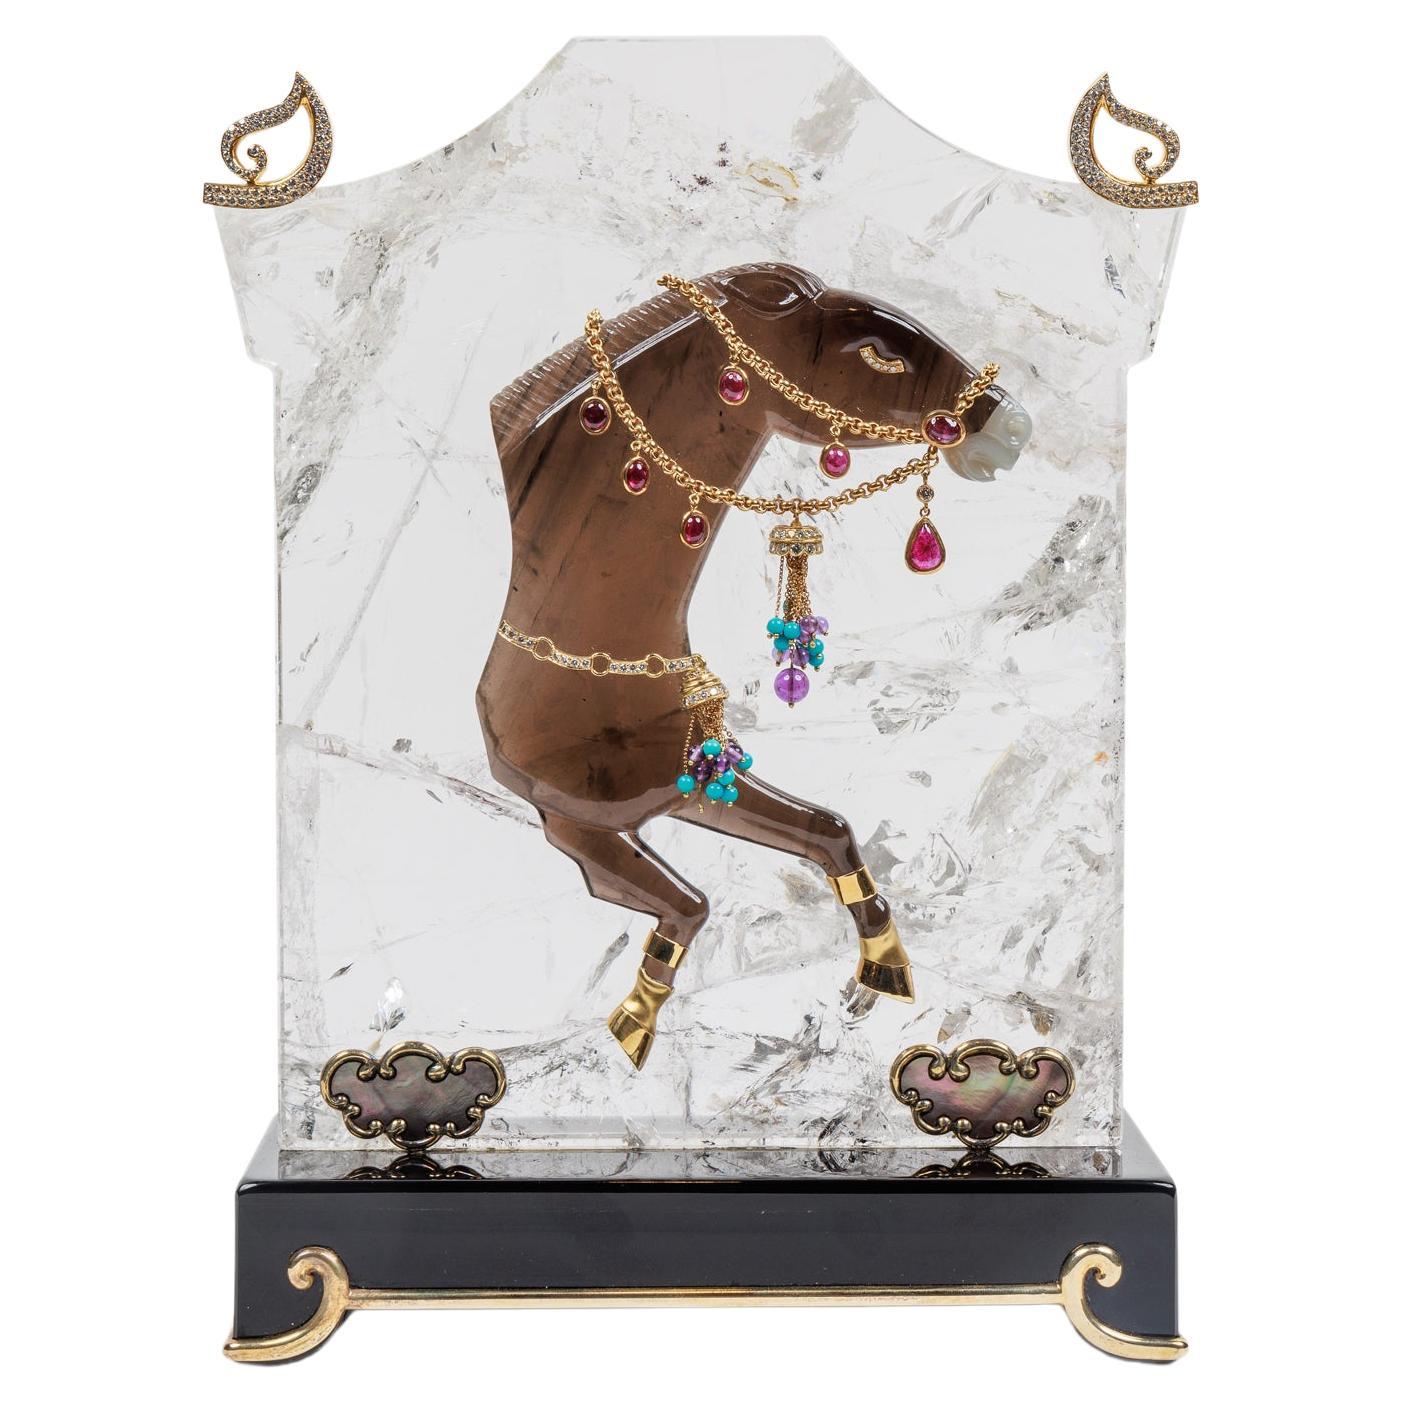 Mellerio Paris, a French Gold, Diamonds, Silver, and Smoky Quartz Carved Horse For Sale